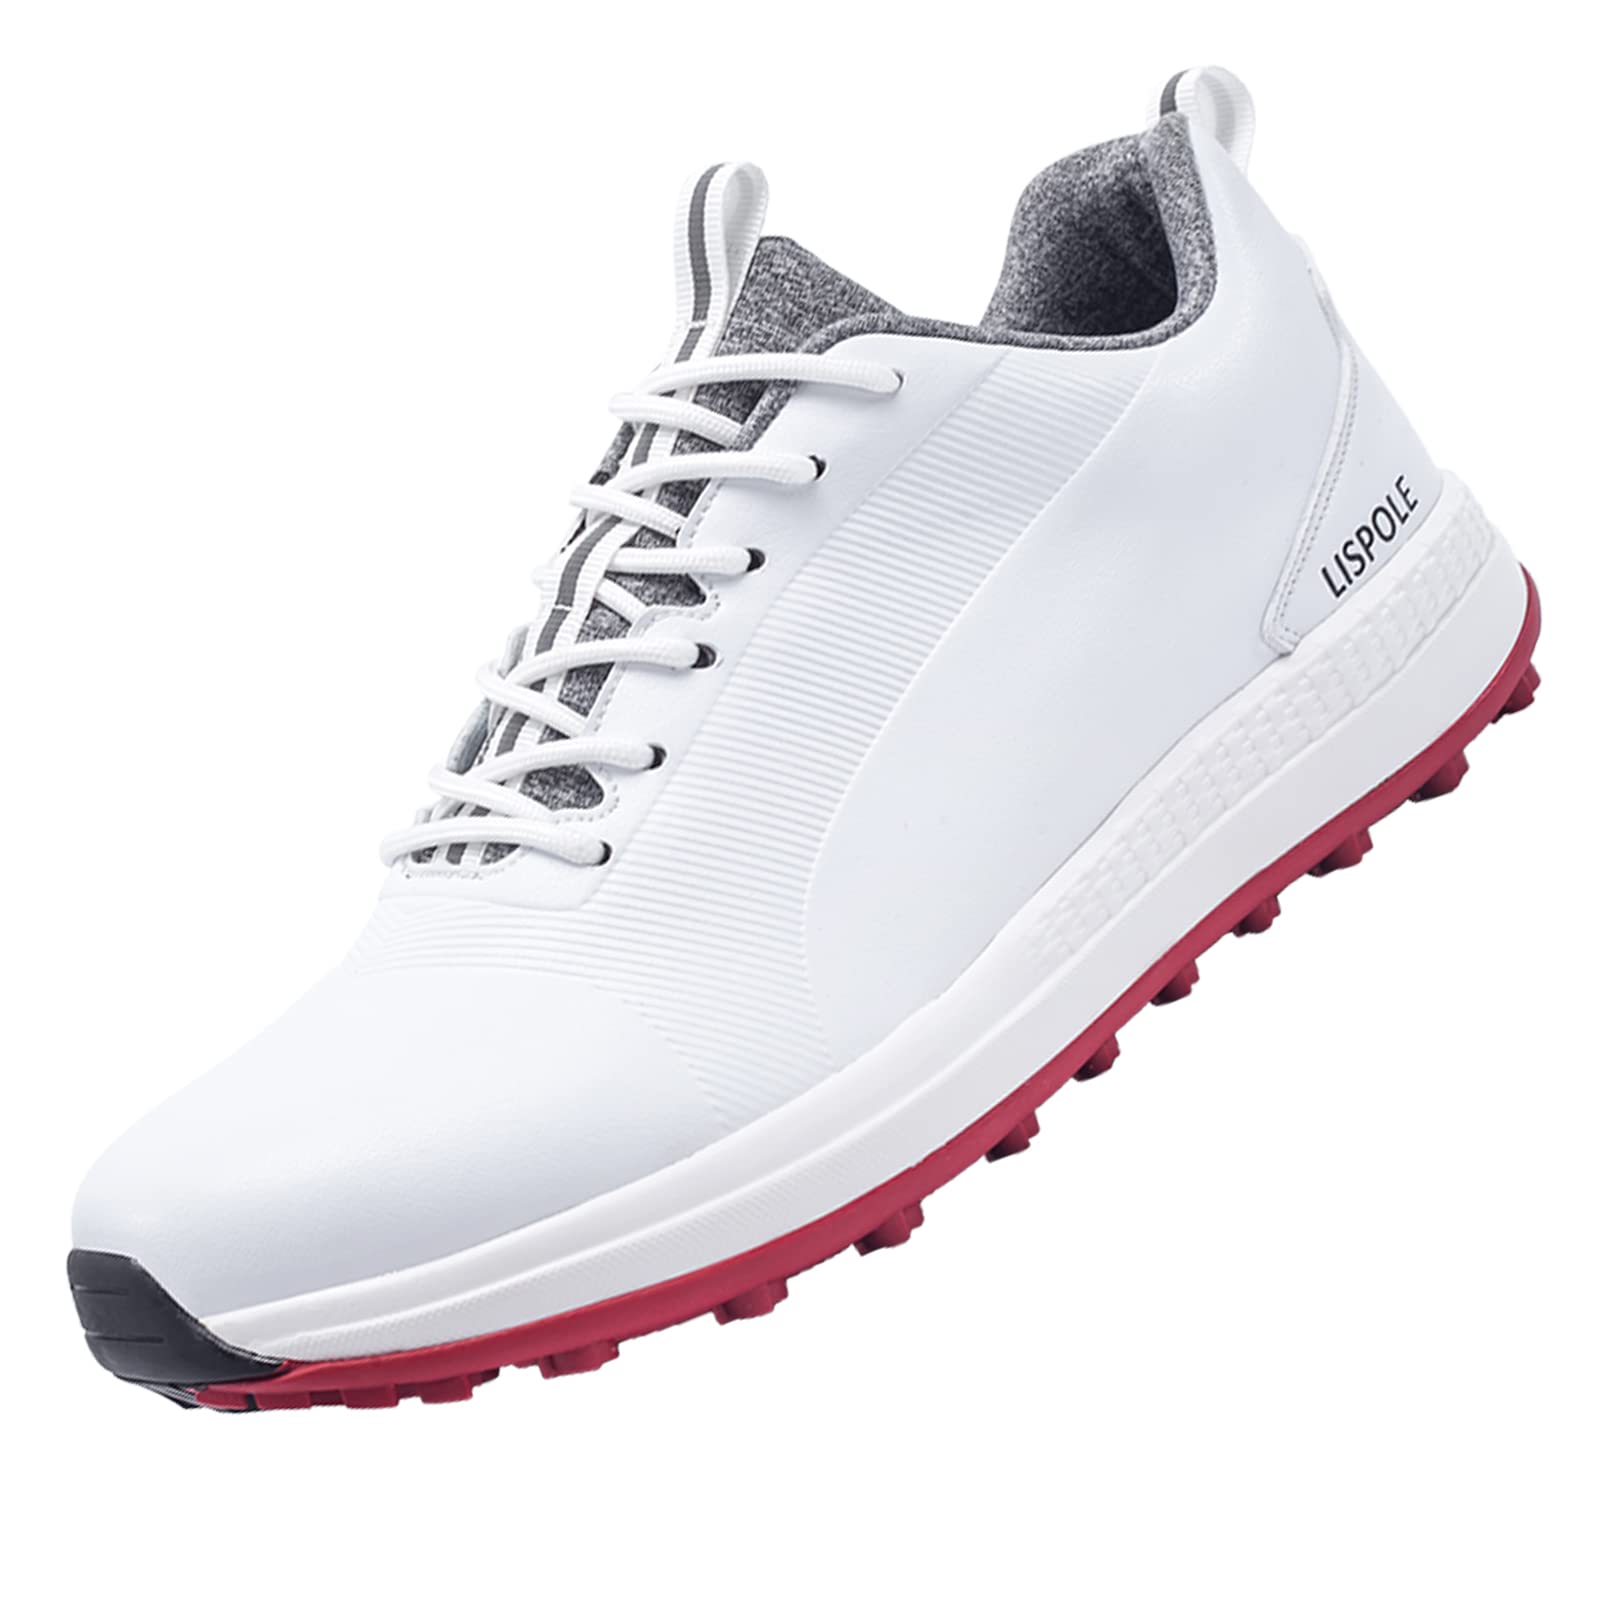 EHQZN Spikeless Golf Shoes Men Waterproof Golf Shoes Comfortable Breathable Golf Footwear Mens Golf Sneakers Golf Walking Sho